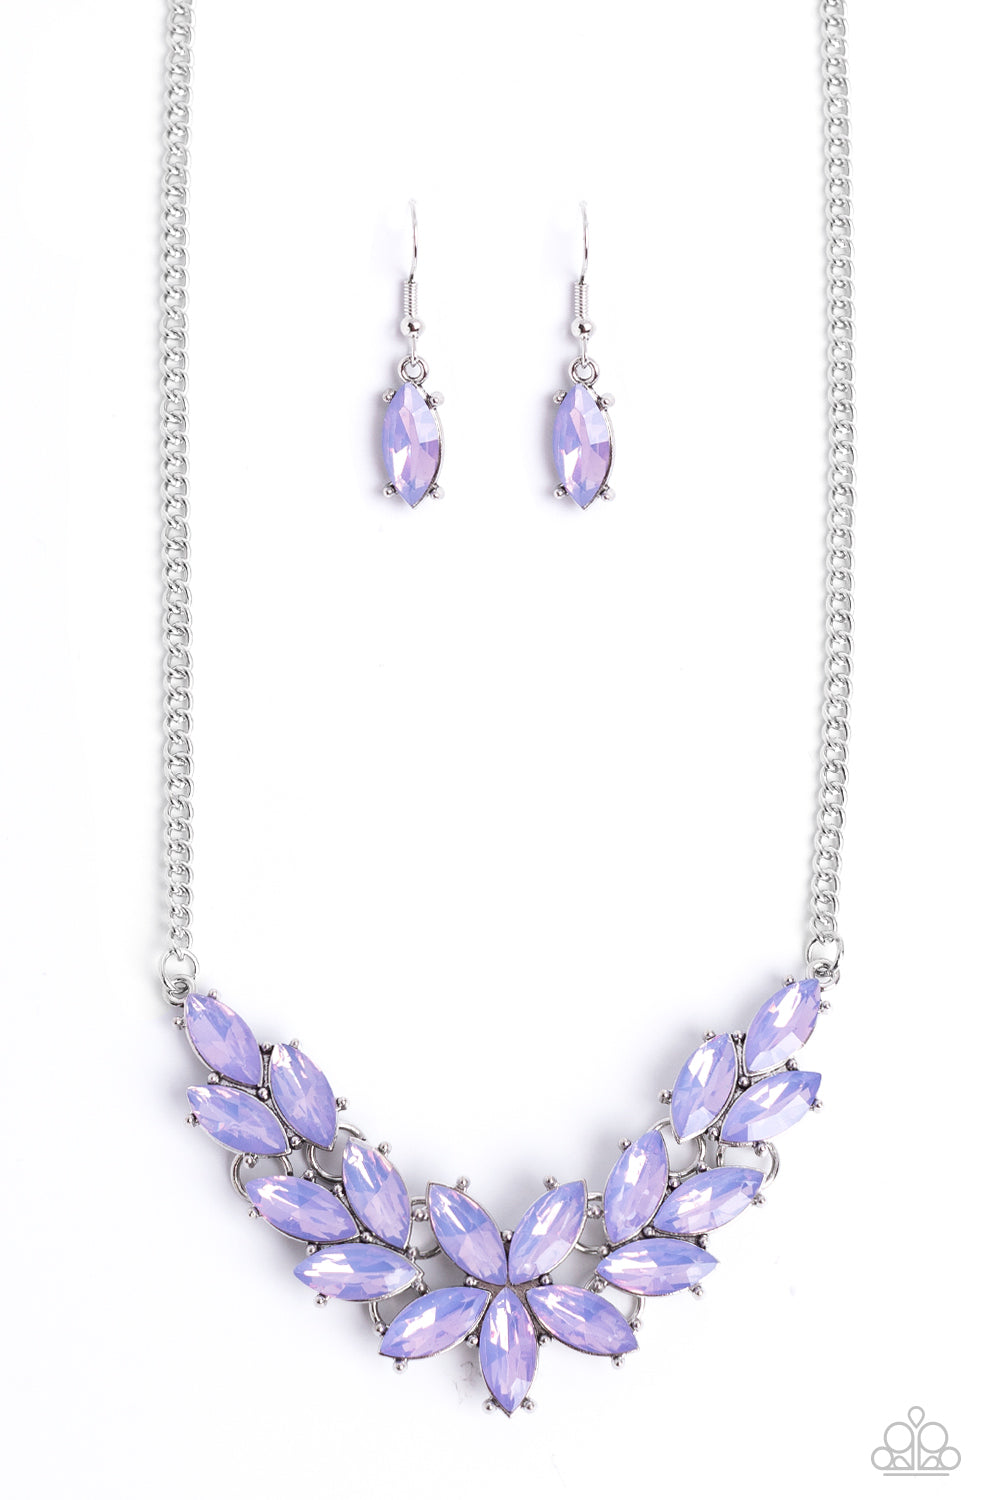 Ethereal Efflorescence - Purple Necklace